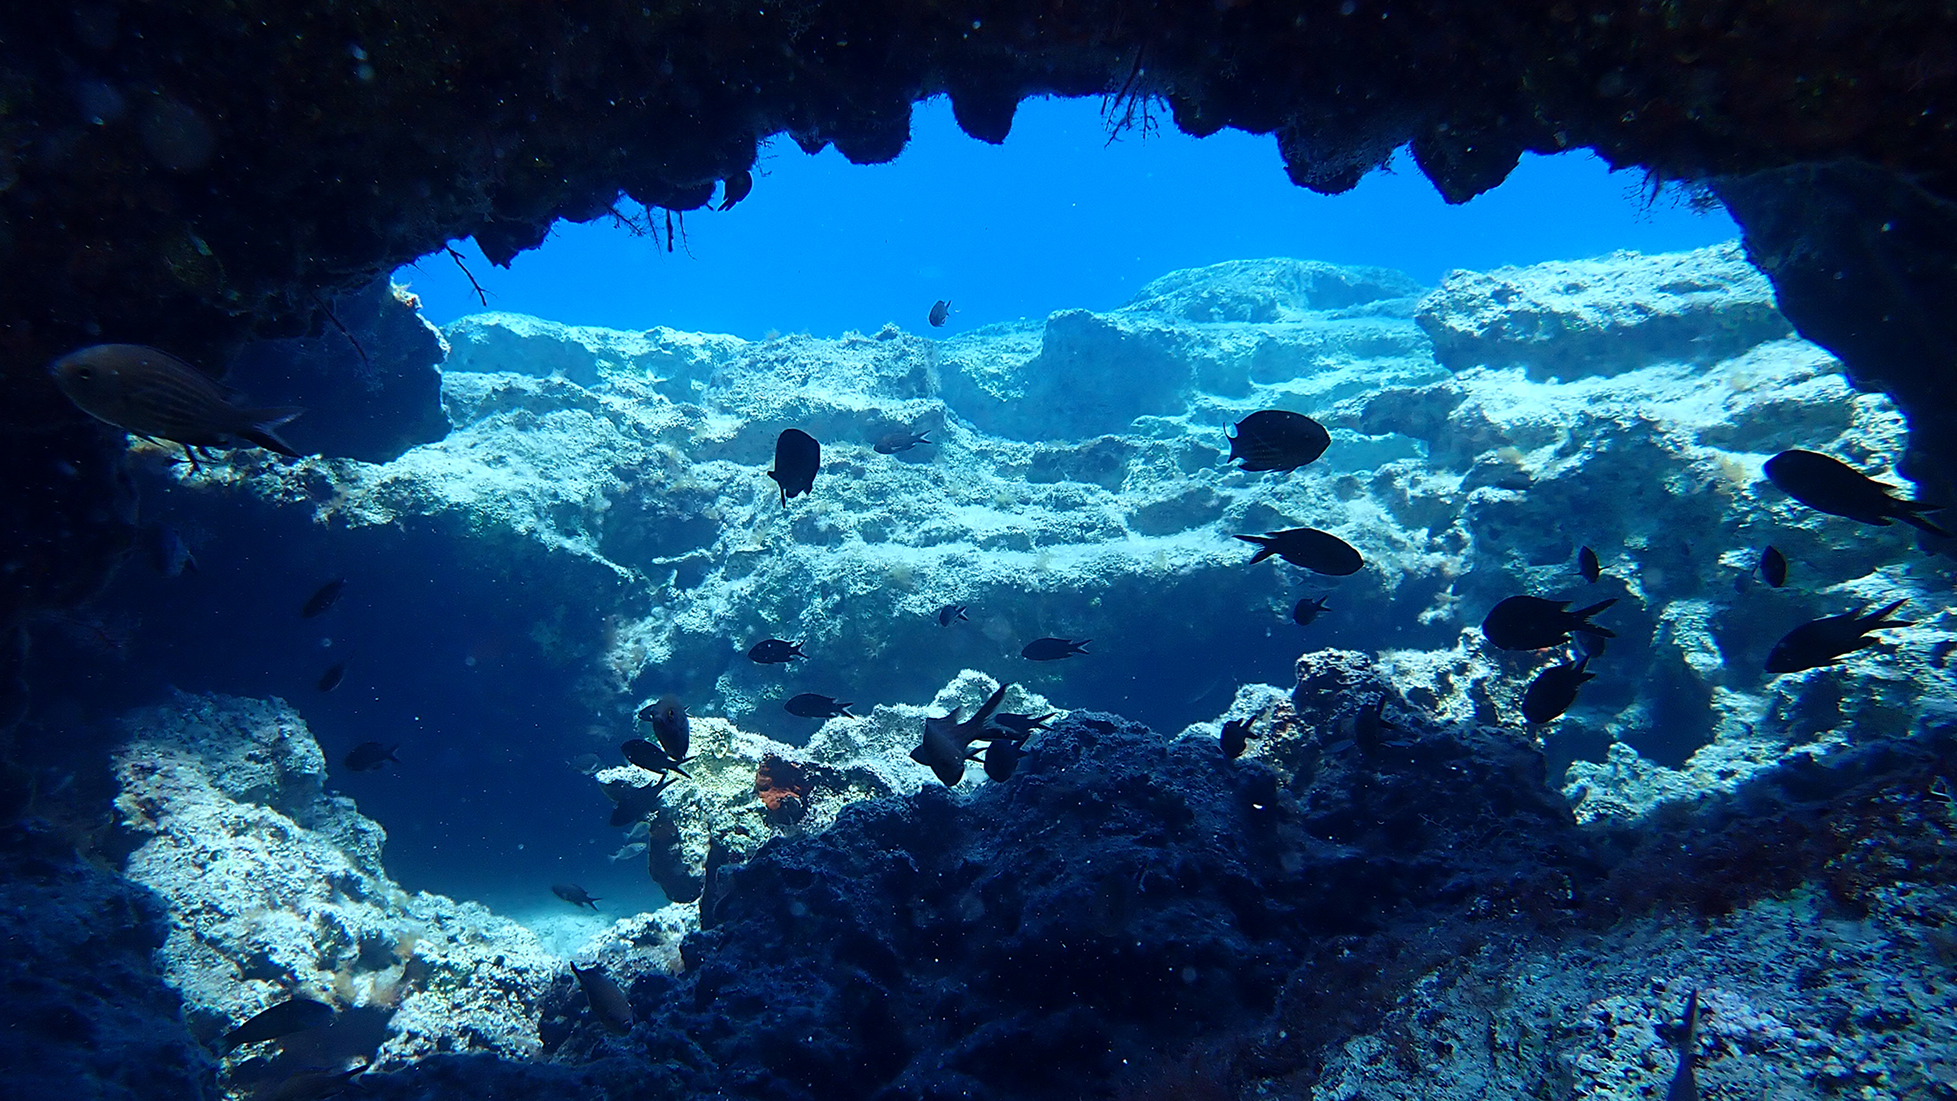 Underwater sea caves in Cavo Greco MPA Cyprus, by Irini Valanto Papageorgiou.